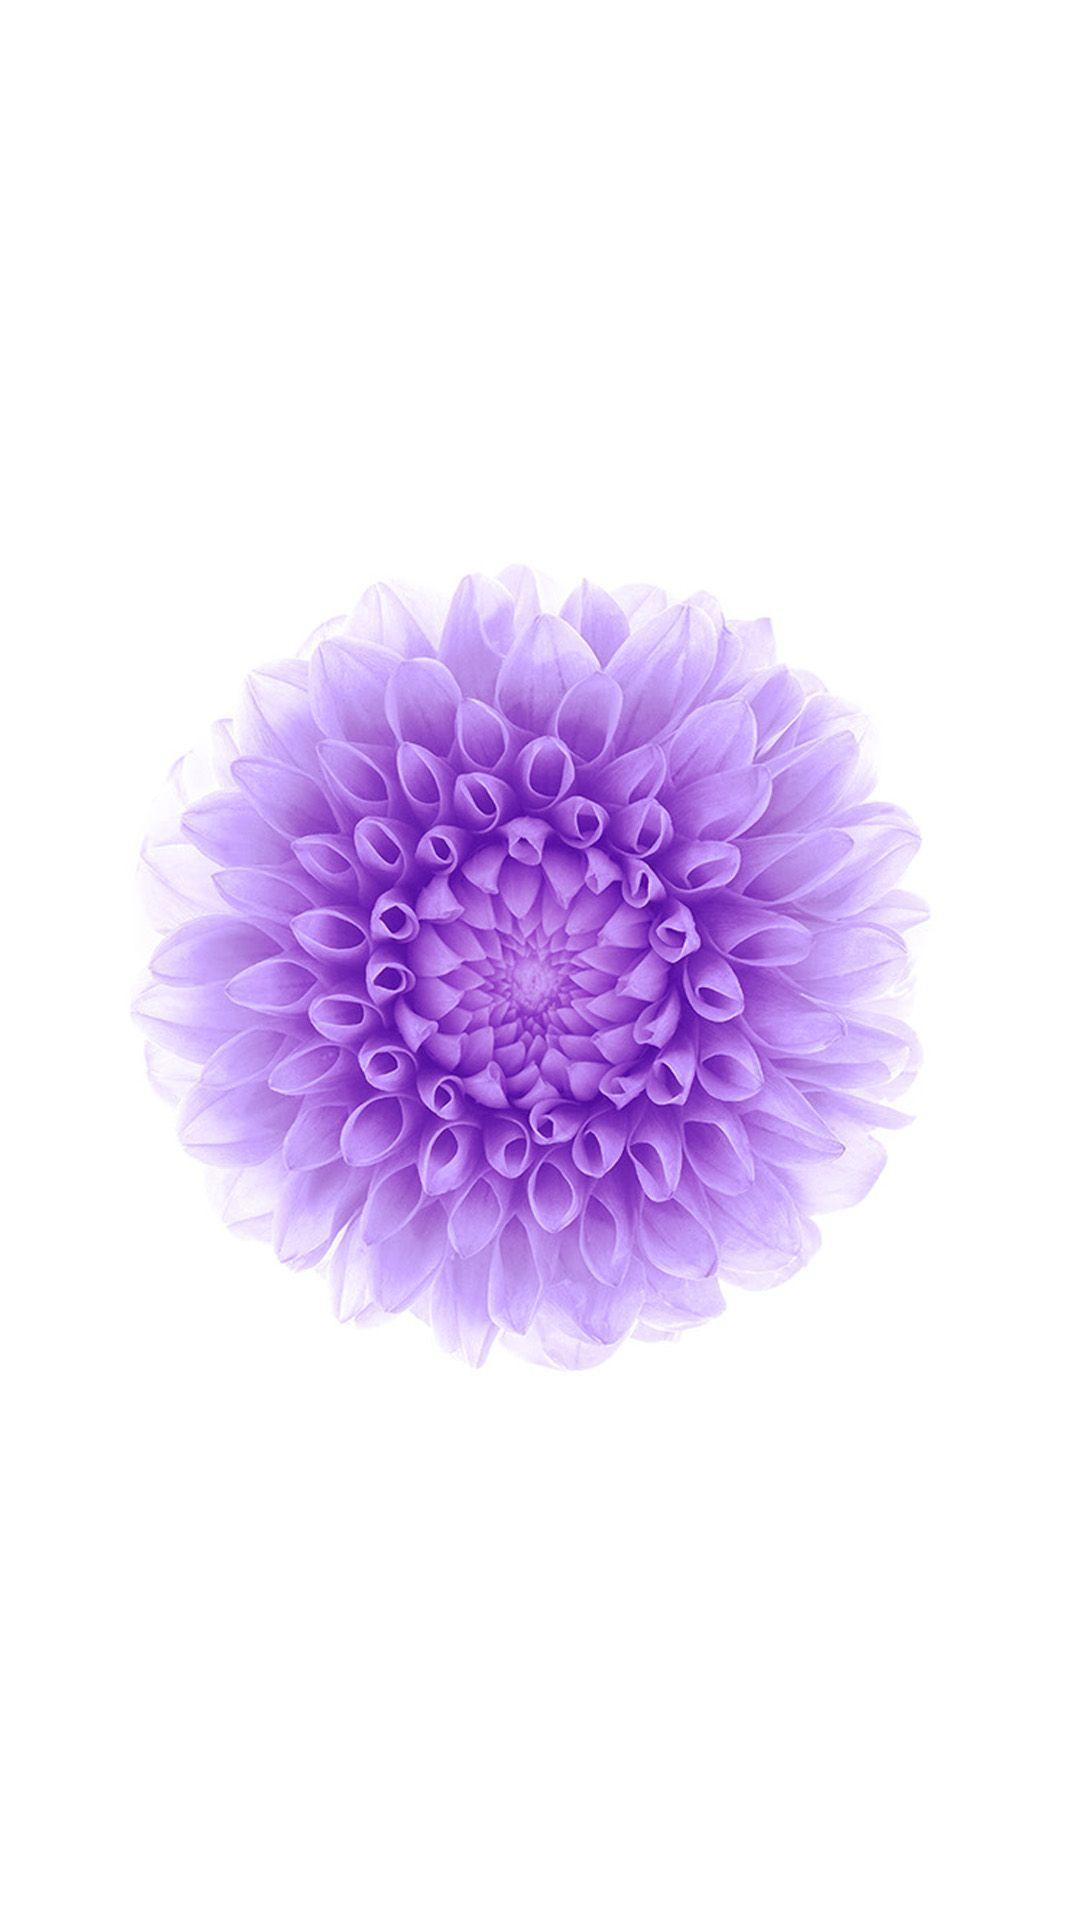 1080x1920 Offical Apple Flower Pattern Background Hình nền iPhone 8